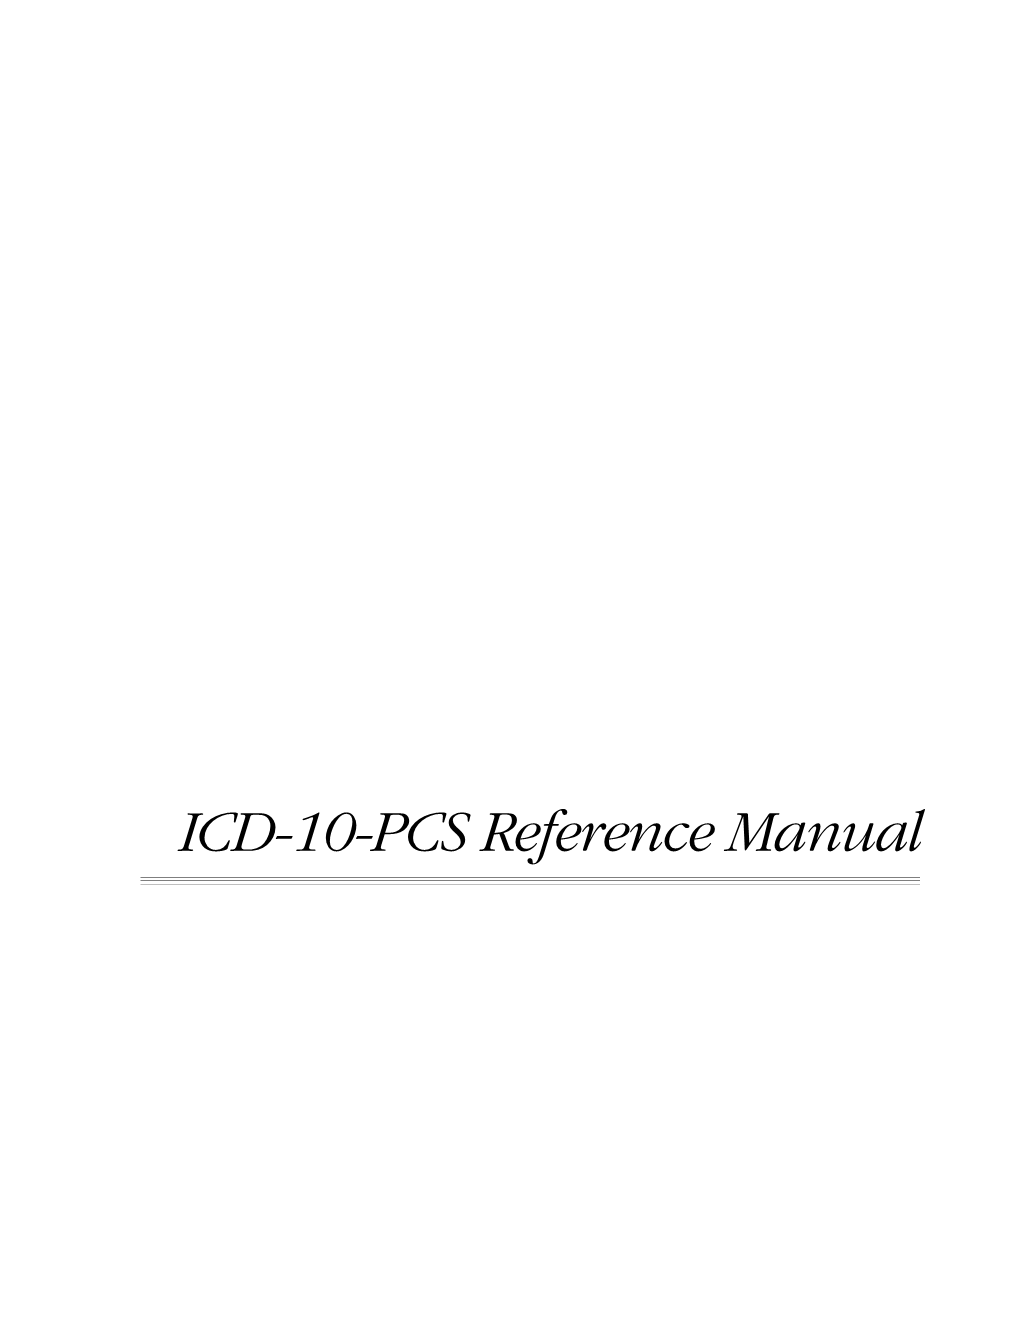 ICD-10-PCS Reference Manual 12/17/08 Preliminary